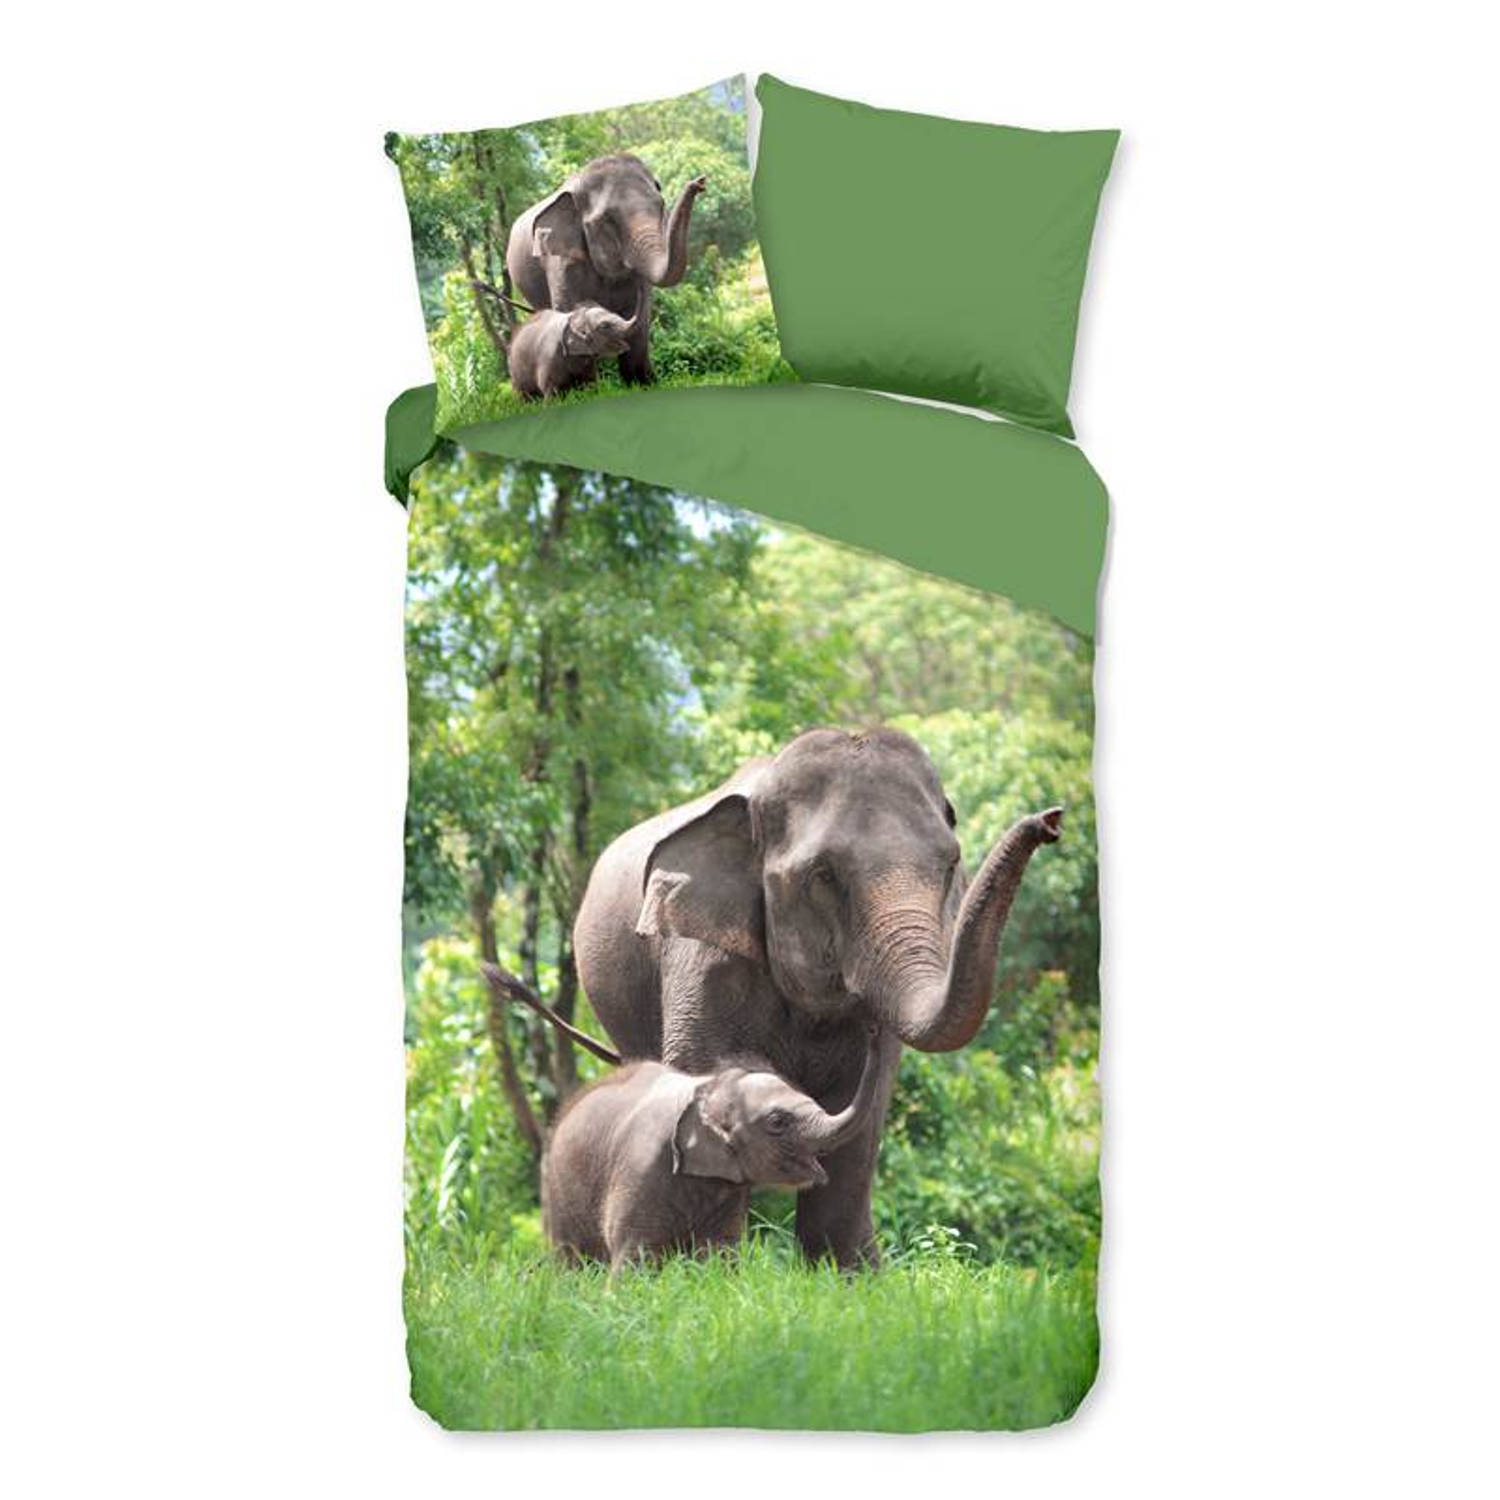 Good Morning Elephants Dekbedovertrek - Junior - 120x150 cm - Green